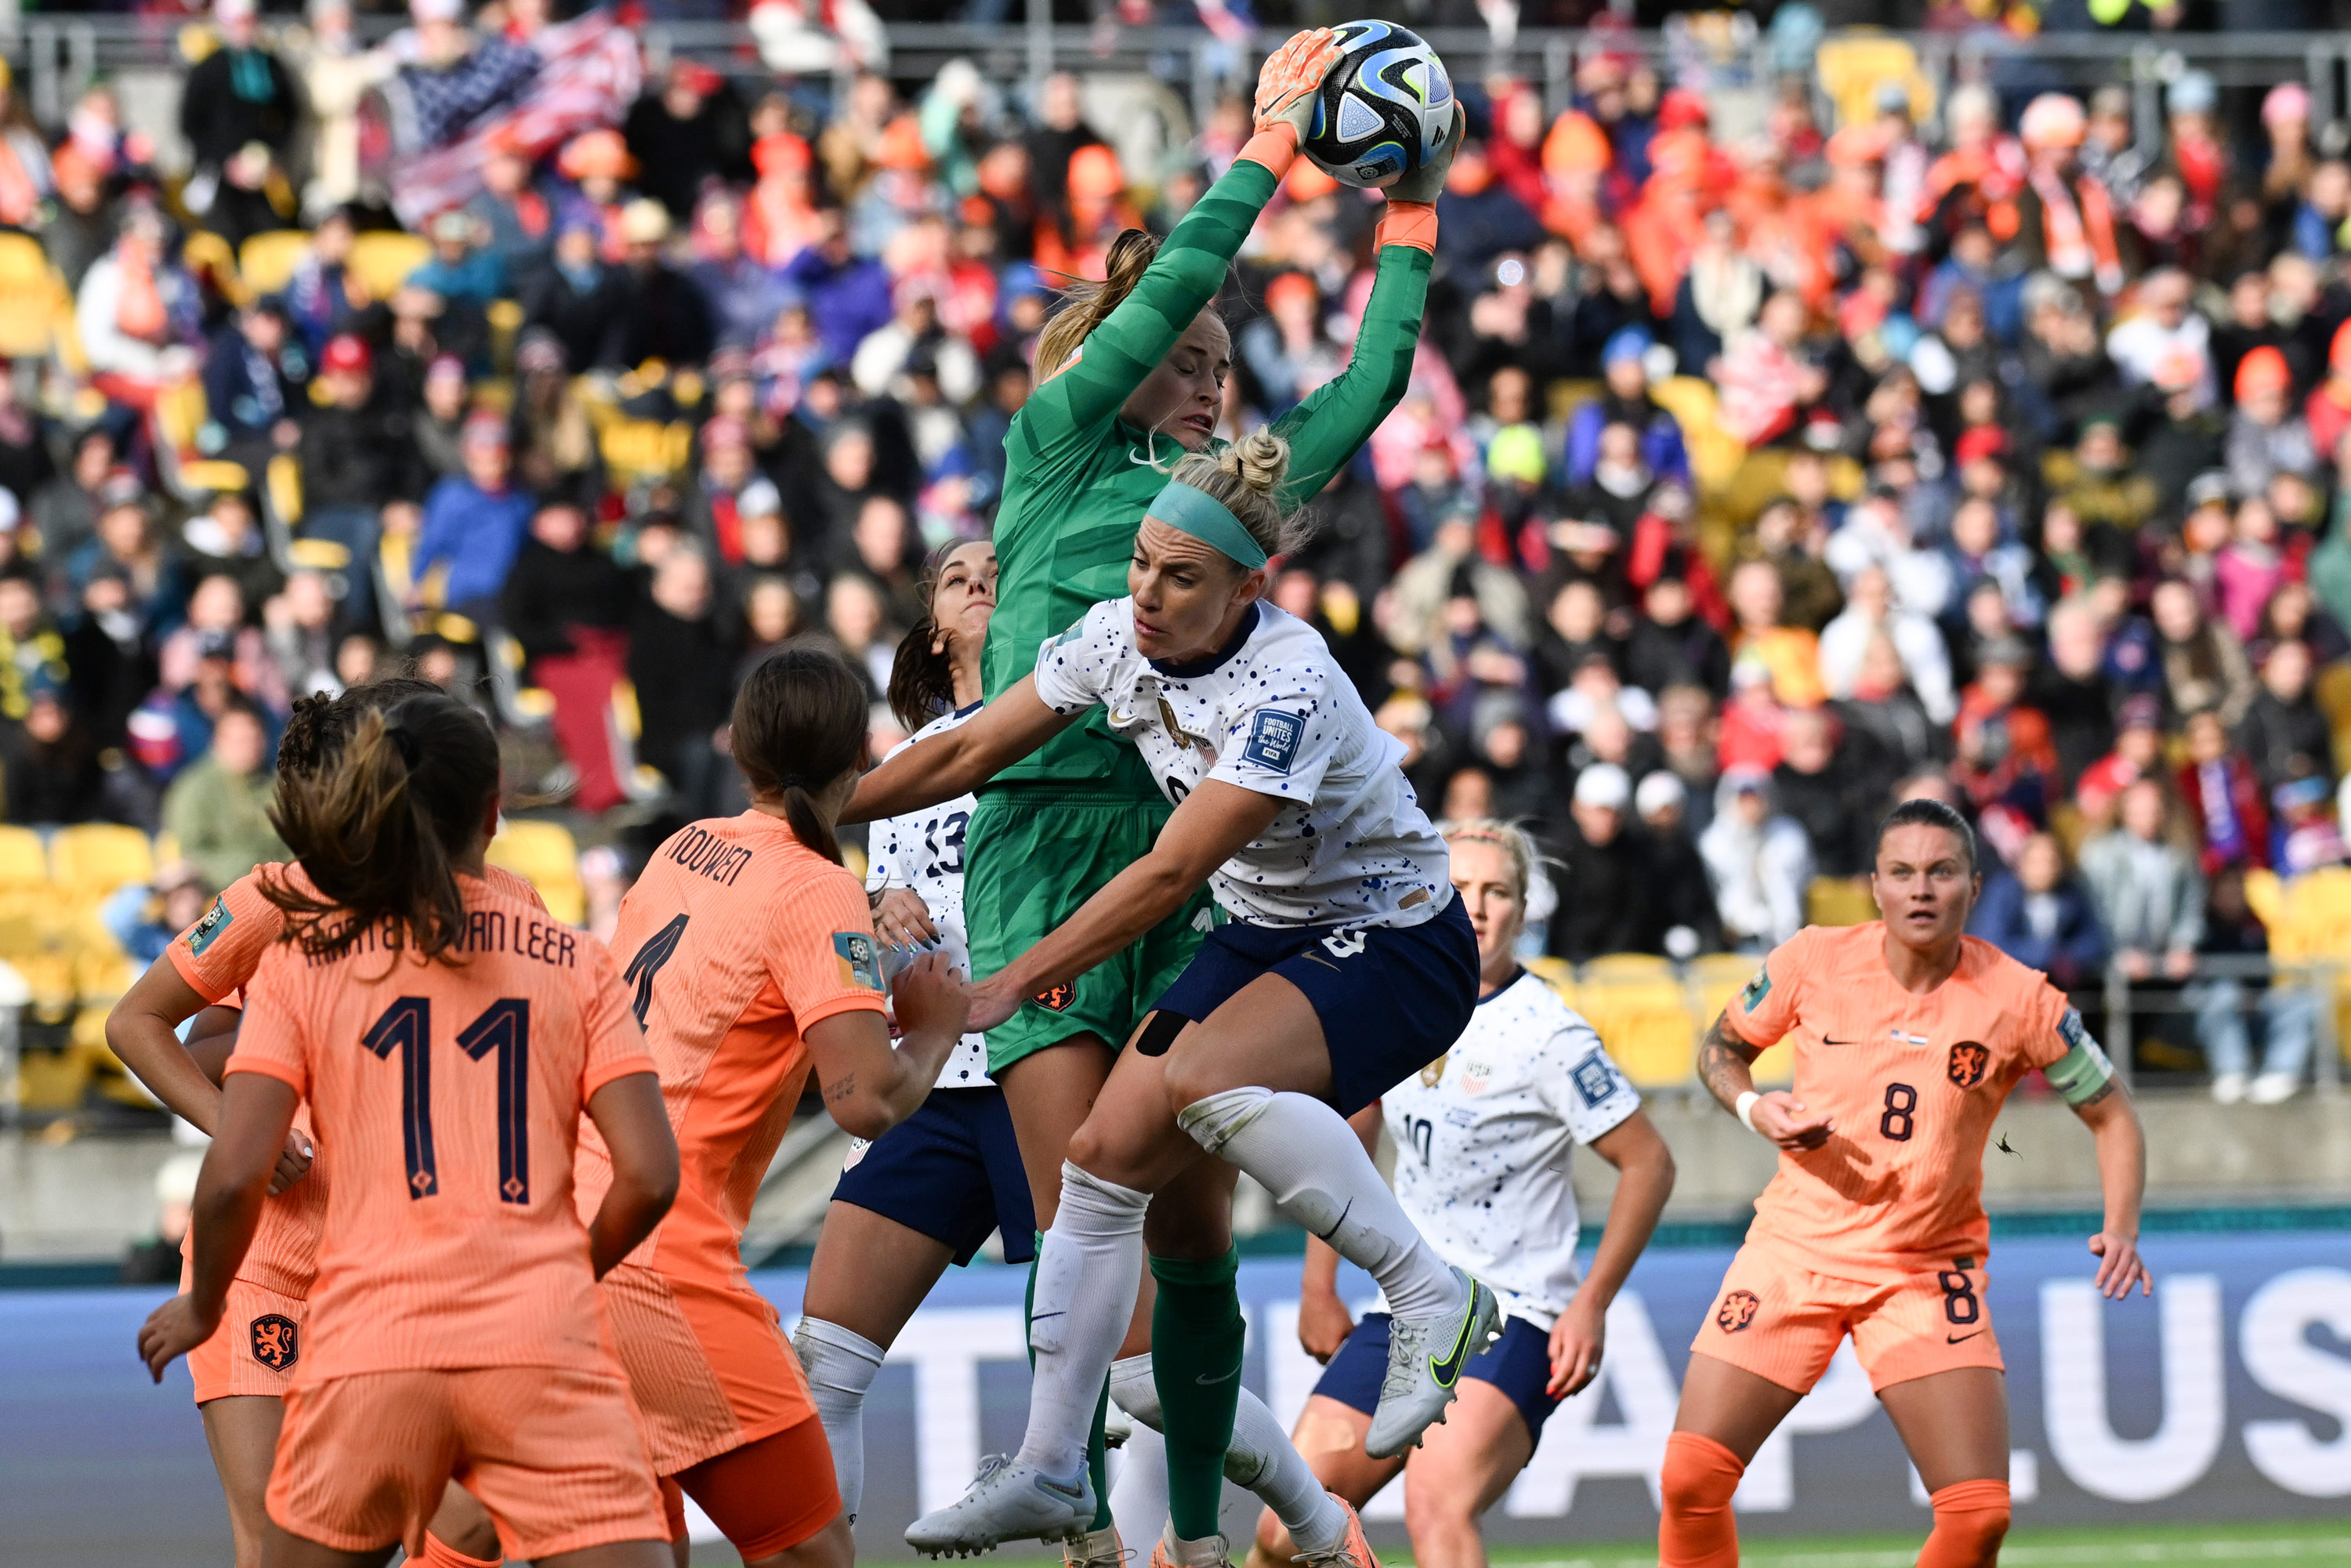 Netherlands' goalkeeper Daphne Van Domselaar takes the ball as USA's Savannah DeMelo collides during the match.